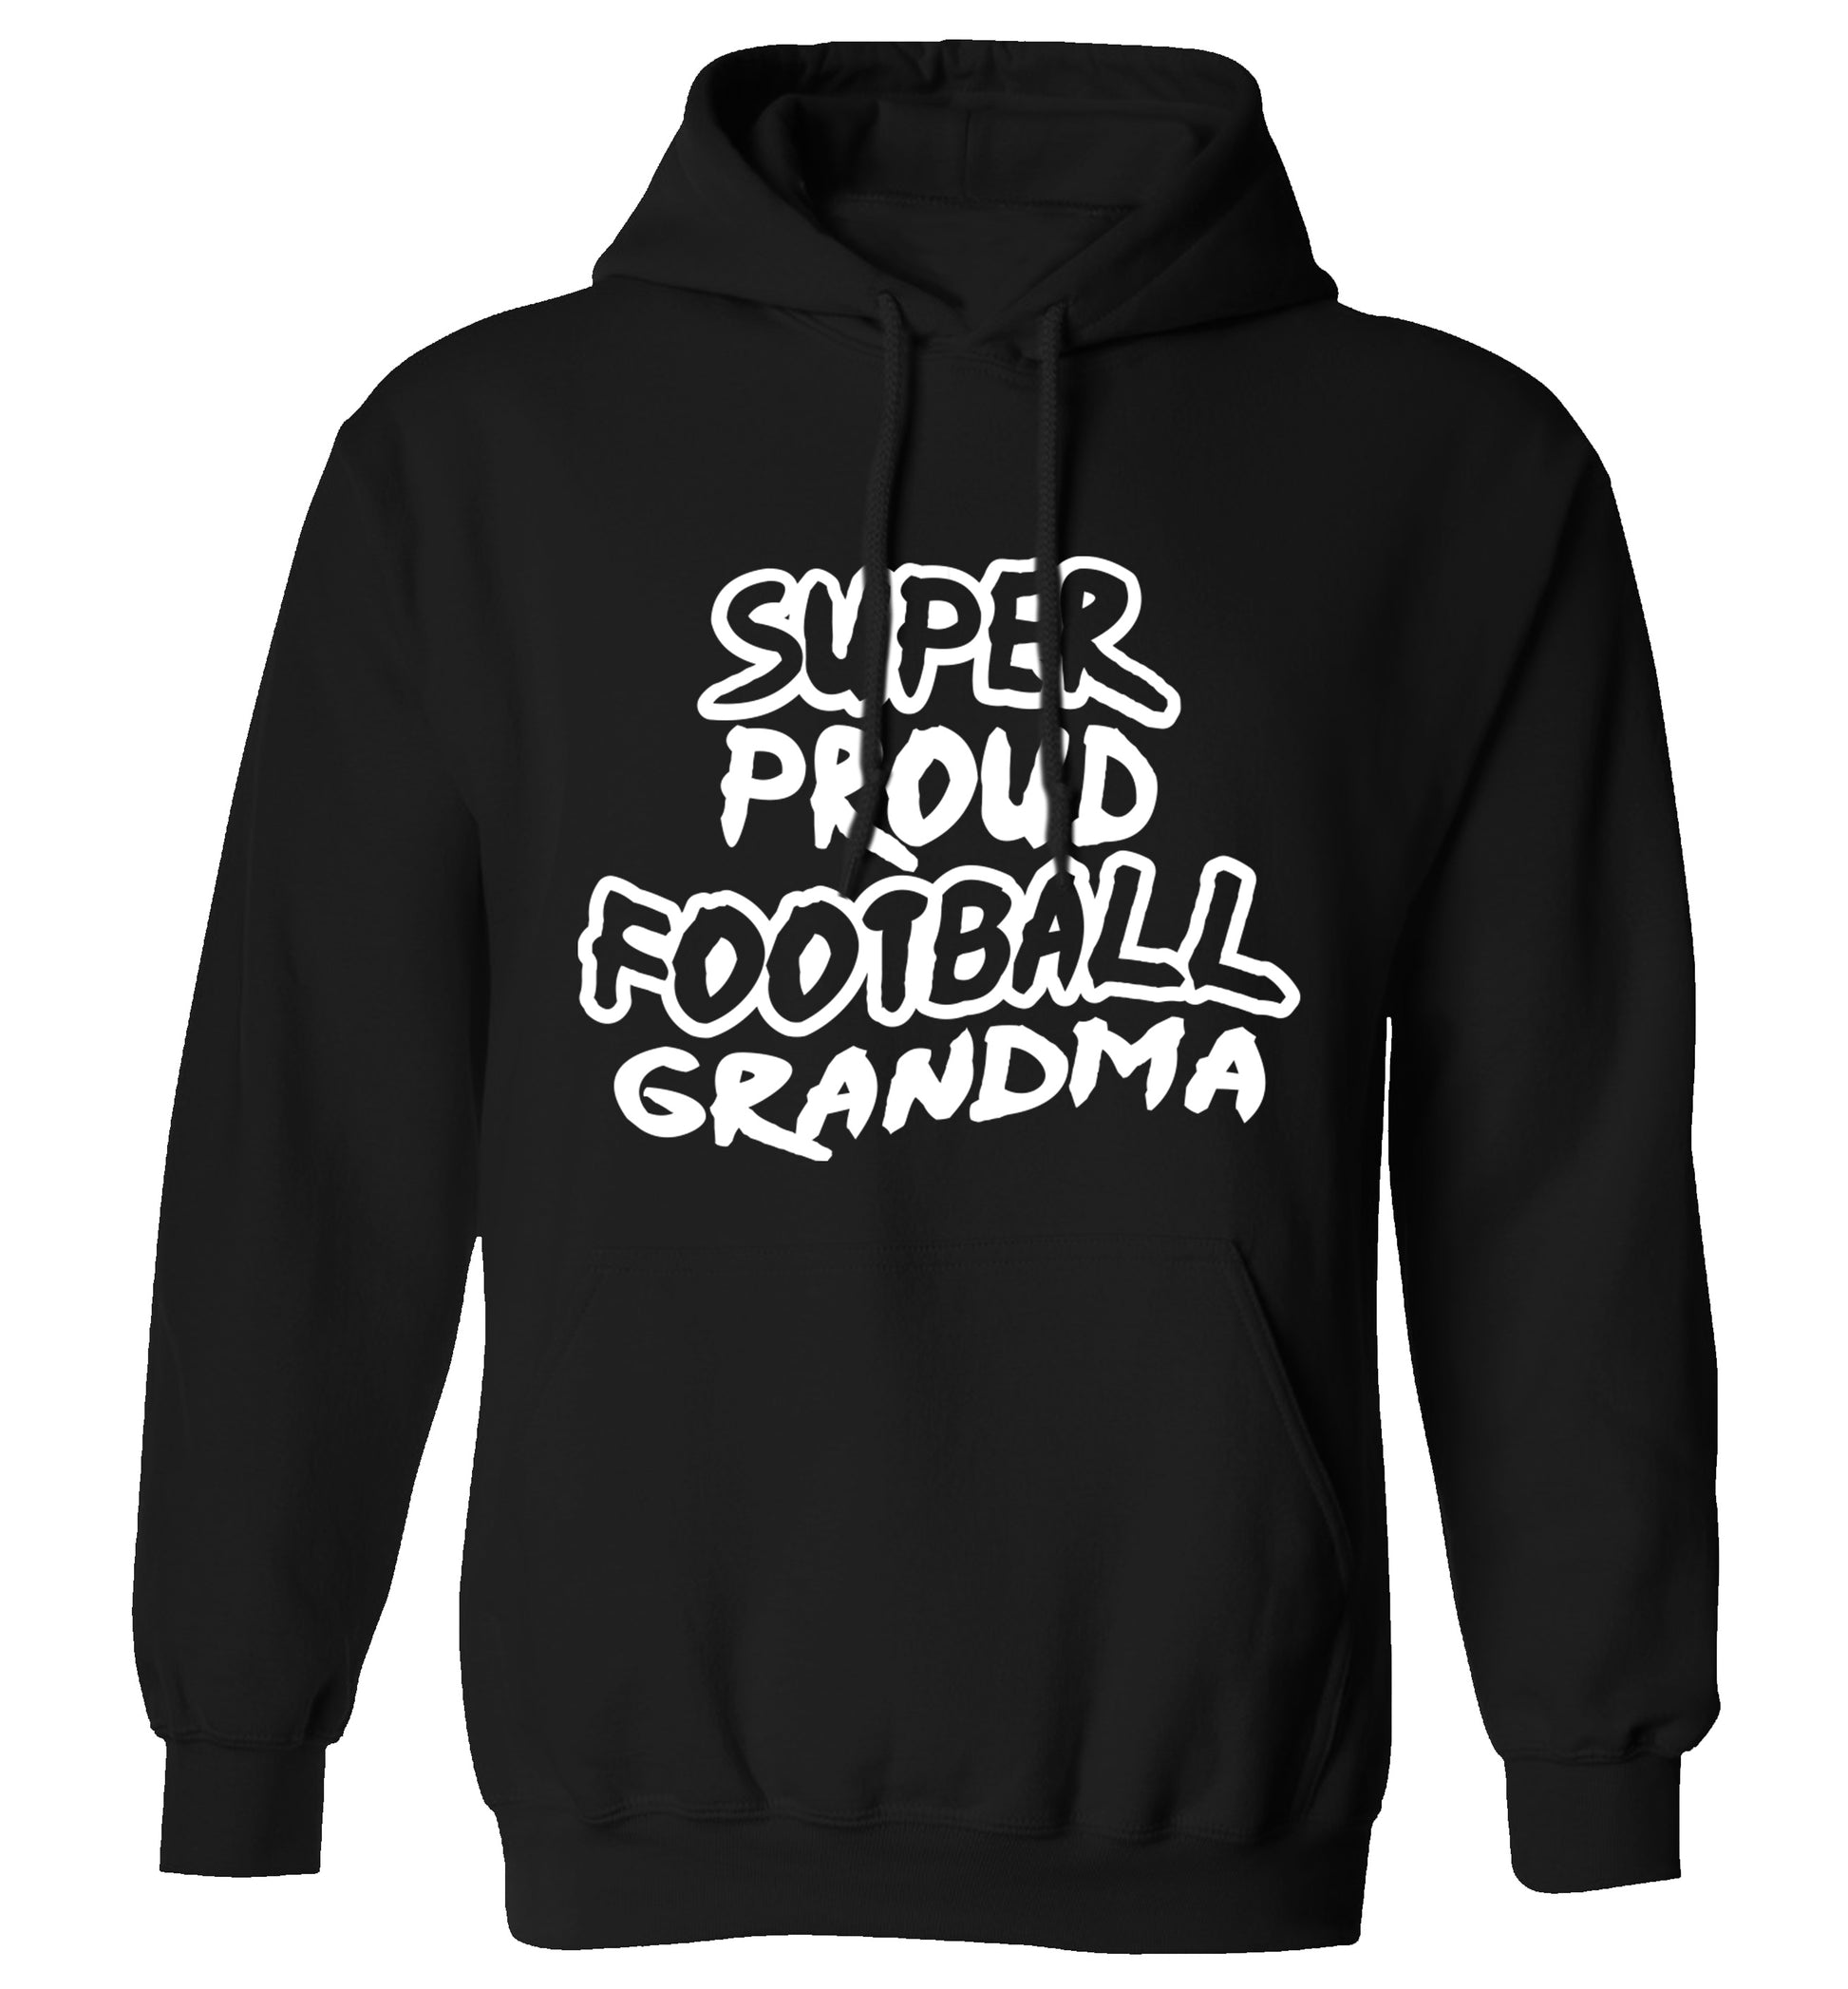 Super proud football grandma adults unisexblack hoodie 2XL